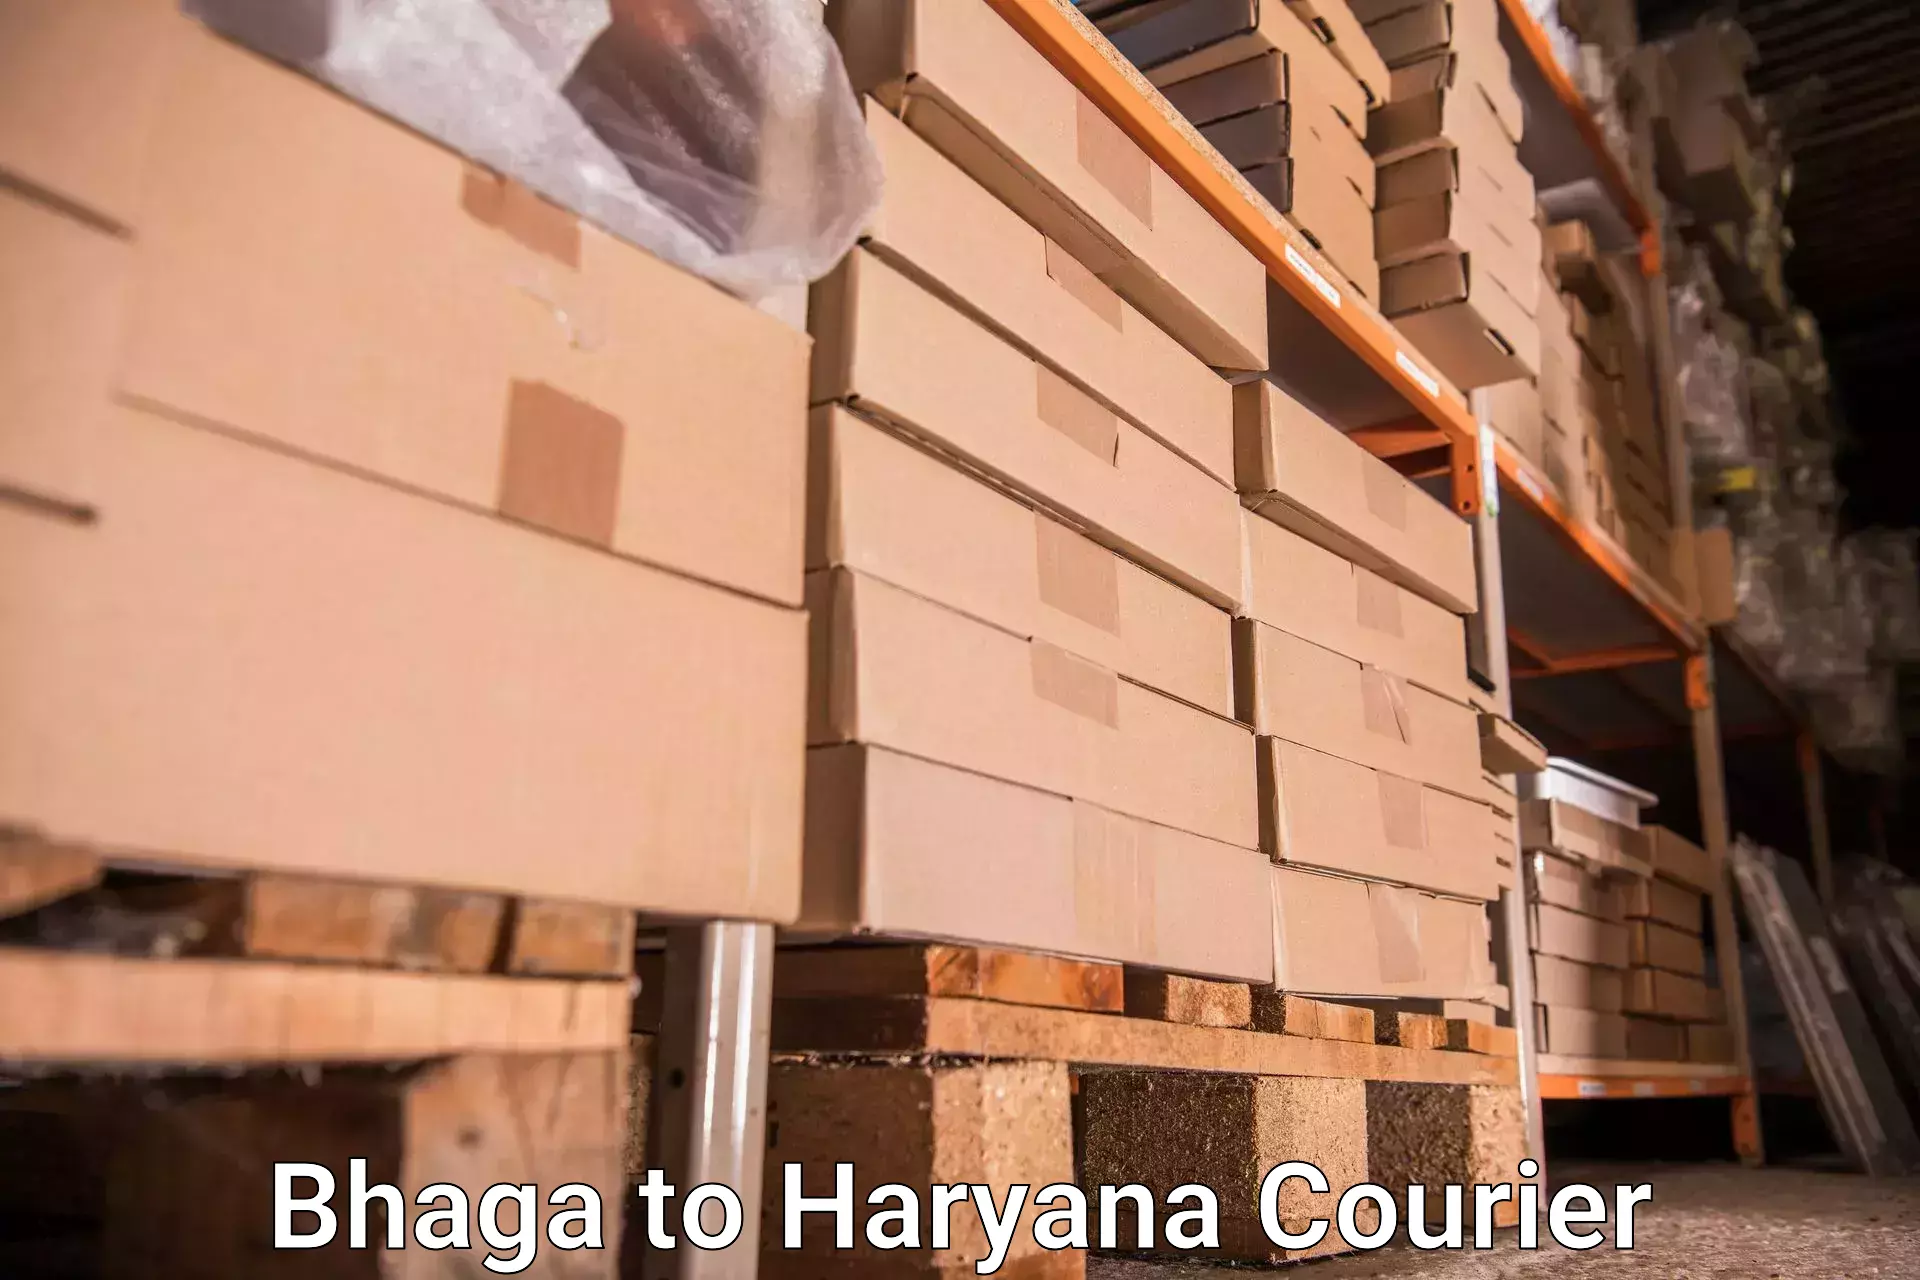 Baggage shipping advice Bhaga to NCR Haryana